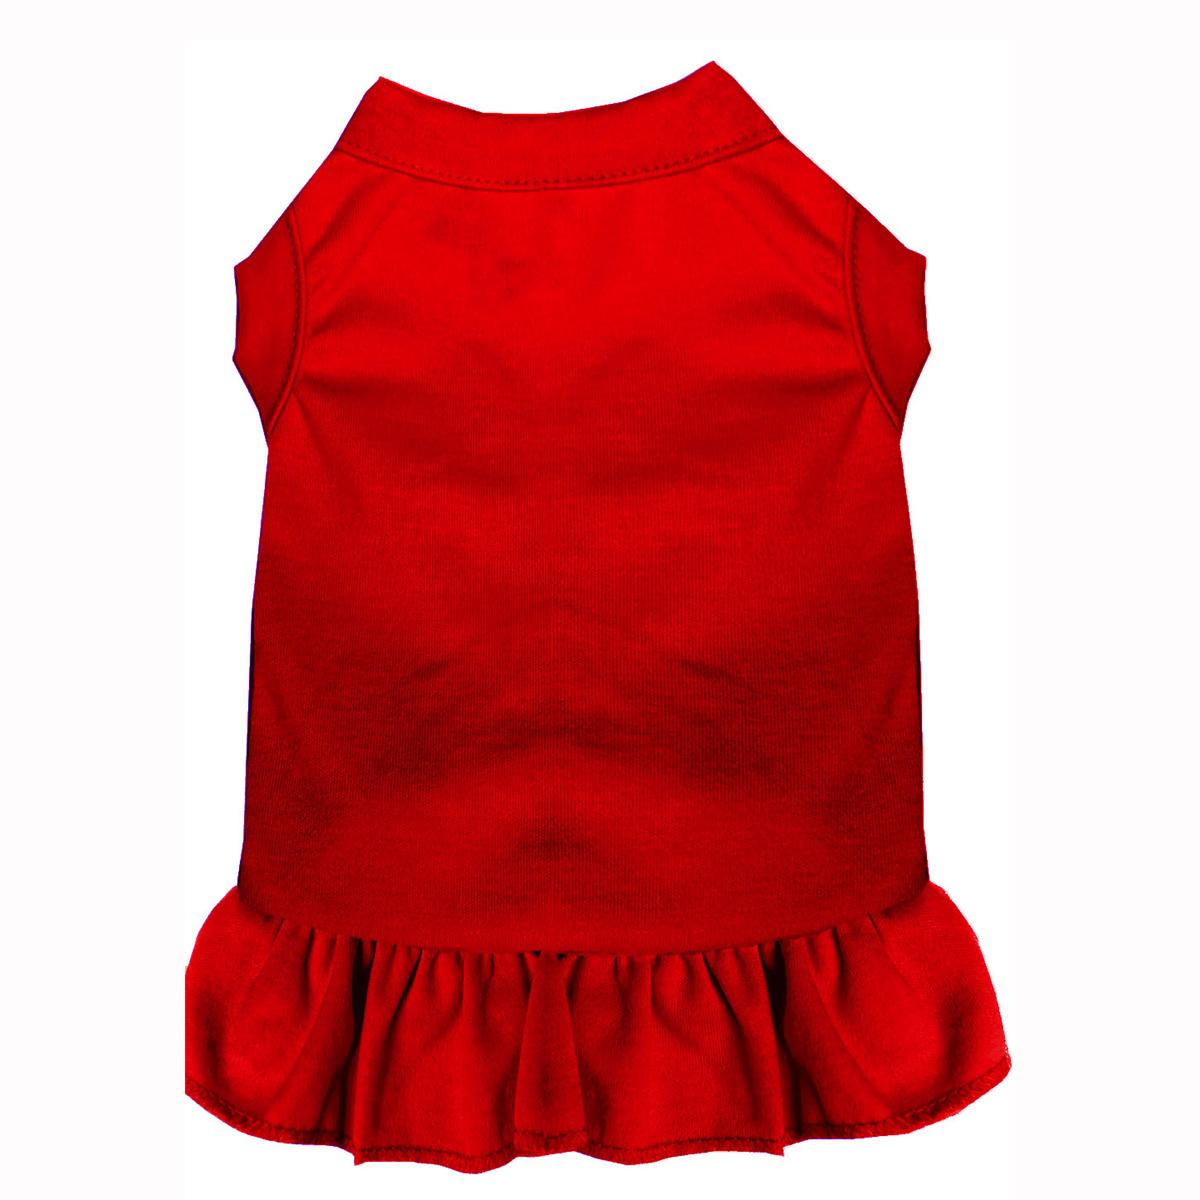 Plain Dog Dress, Red - Extra Small